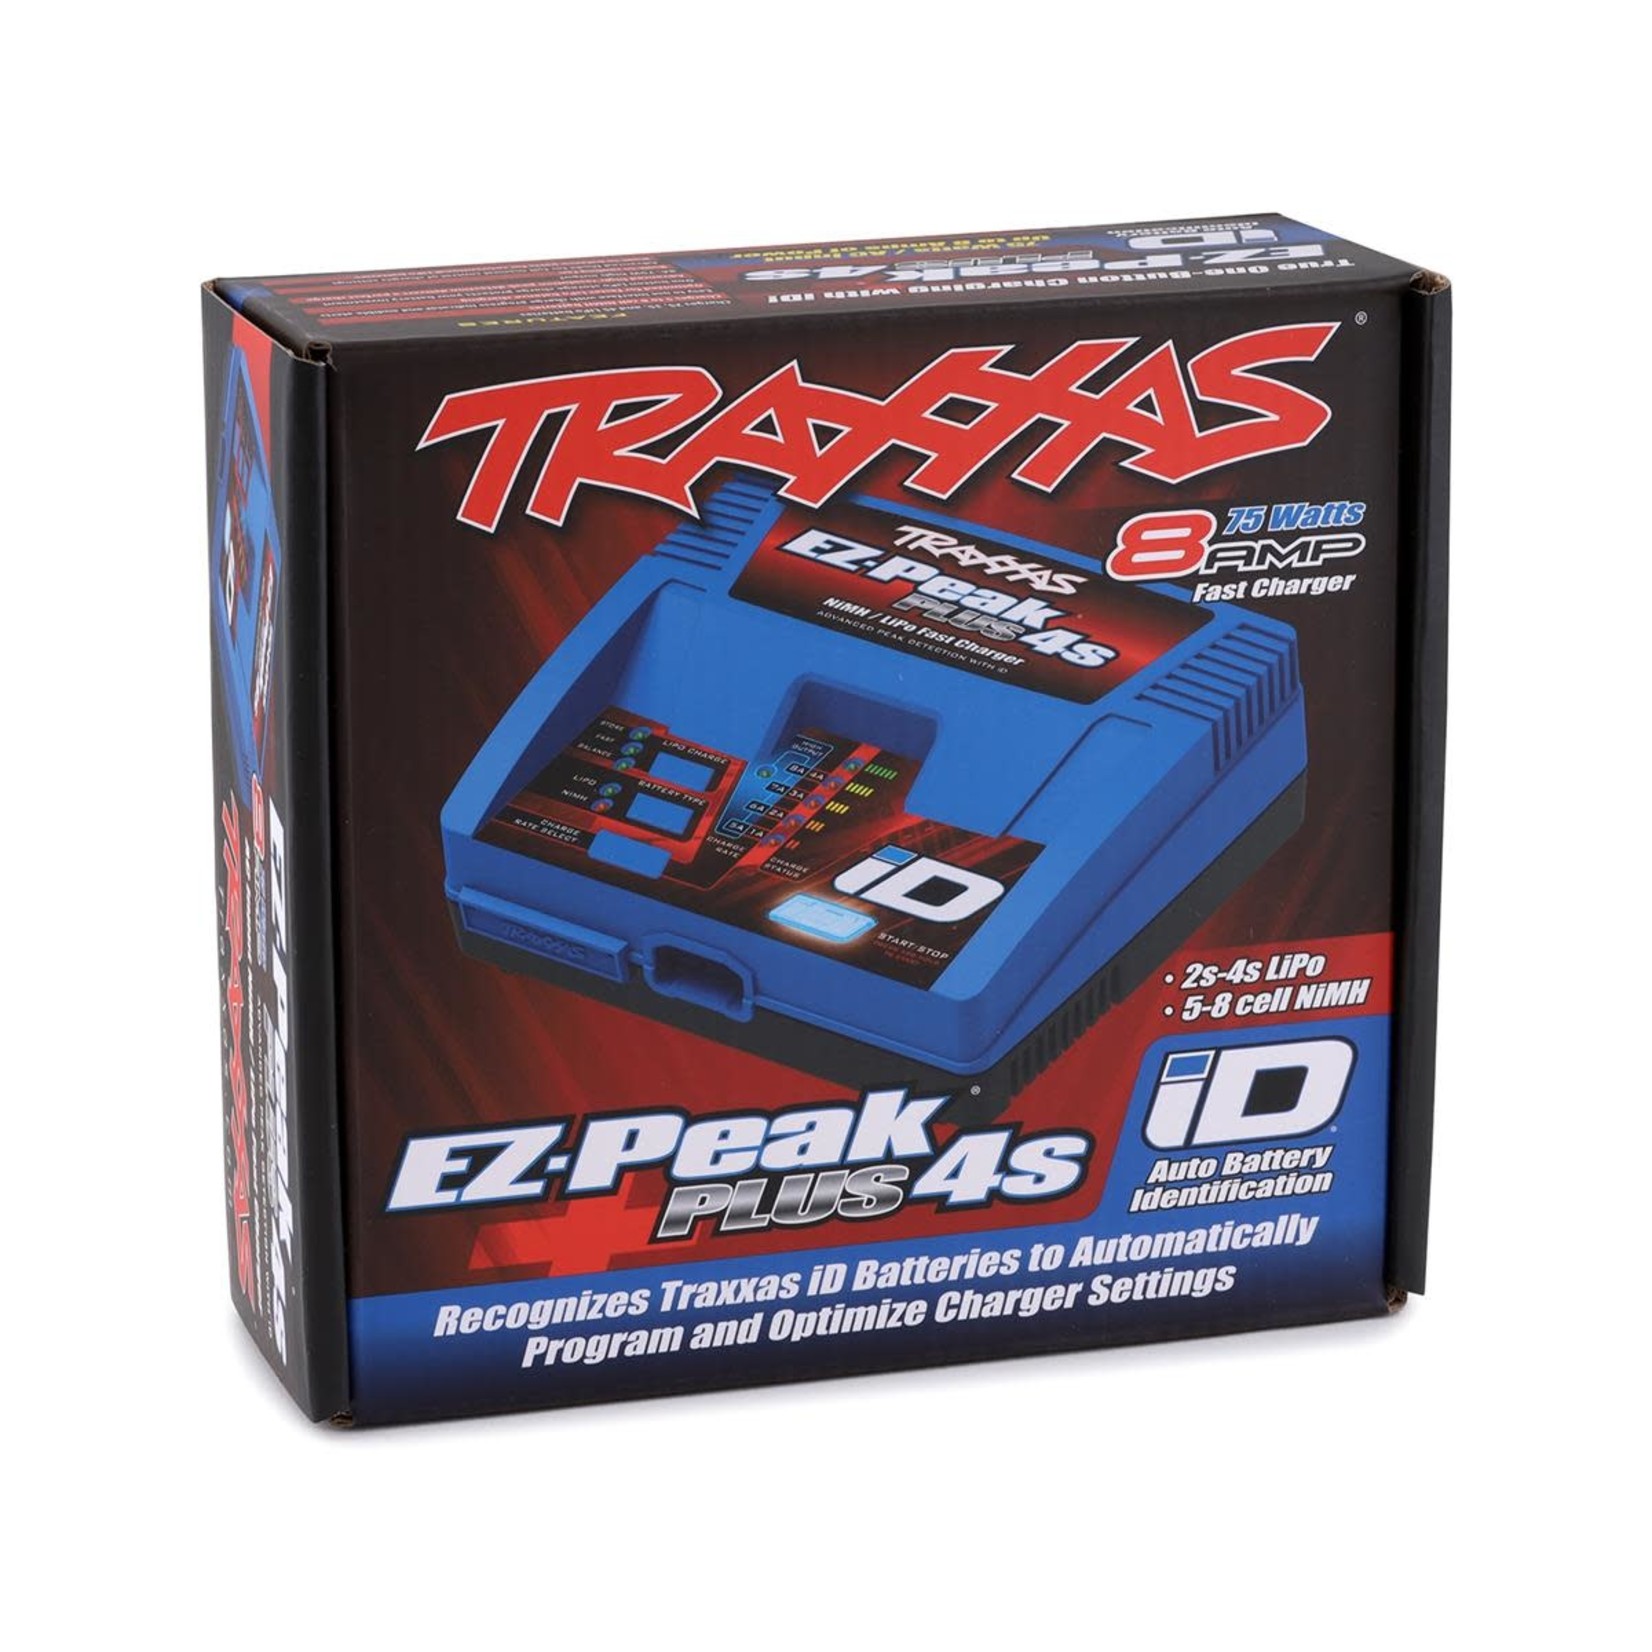 Traxxas Traxxas EZ-Peak Plus 4S Multi-Chemistry Battery Charger w/Auto iD (4S/8A/75W) #2981